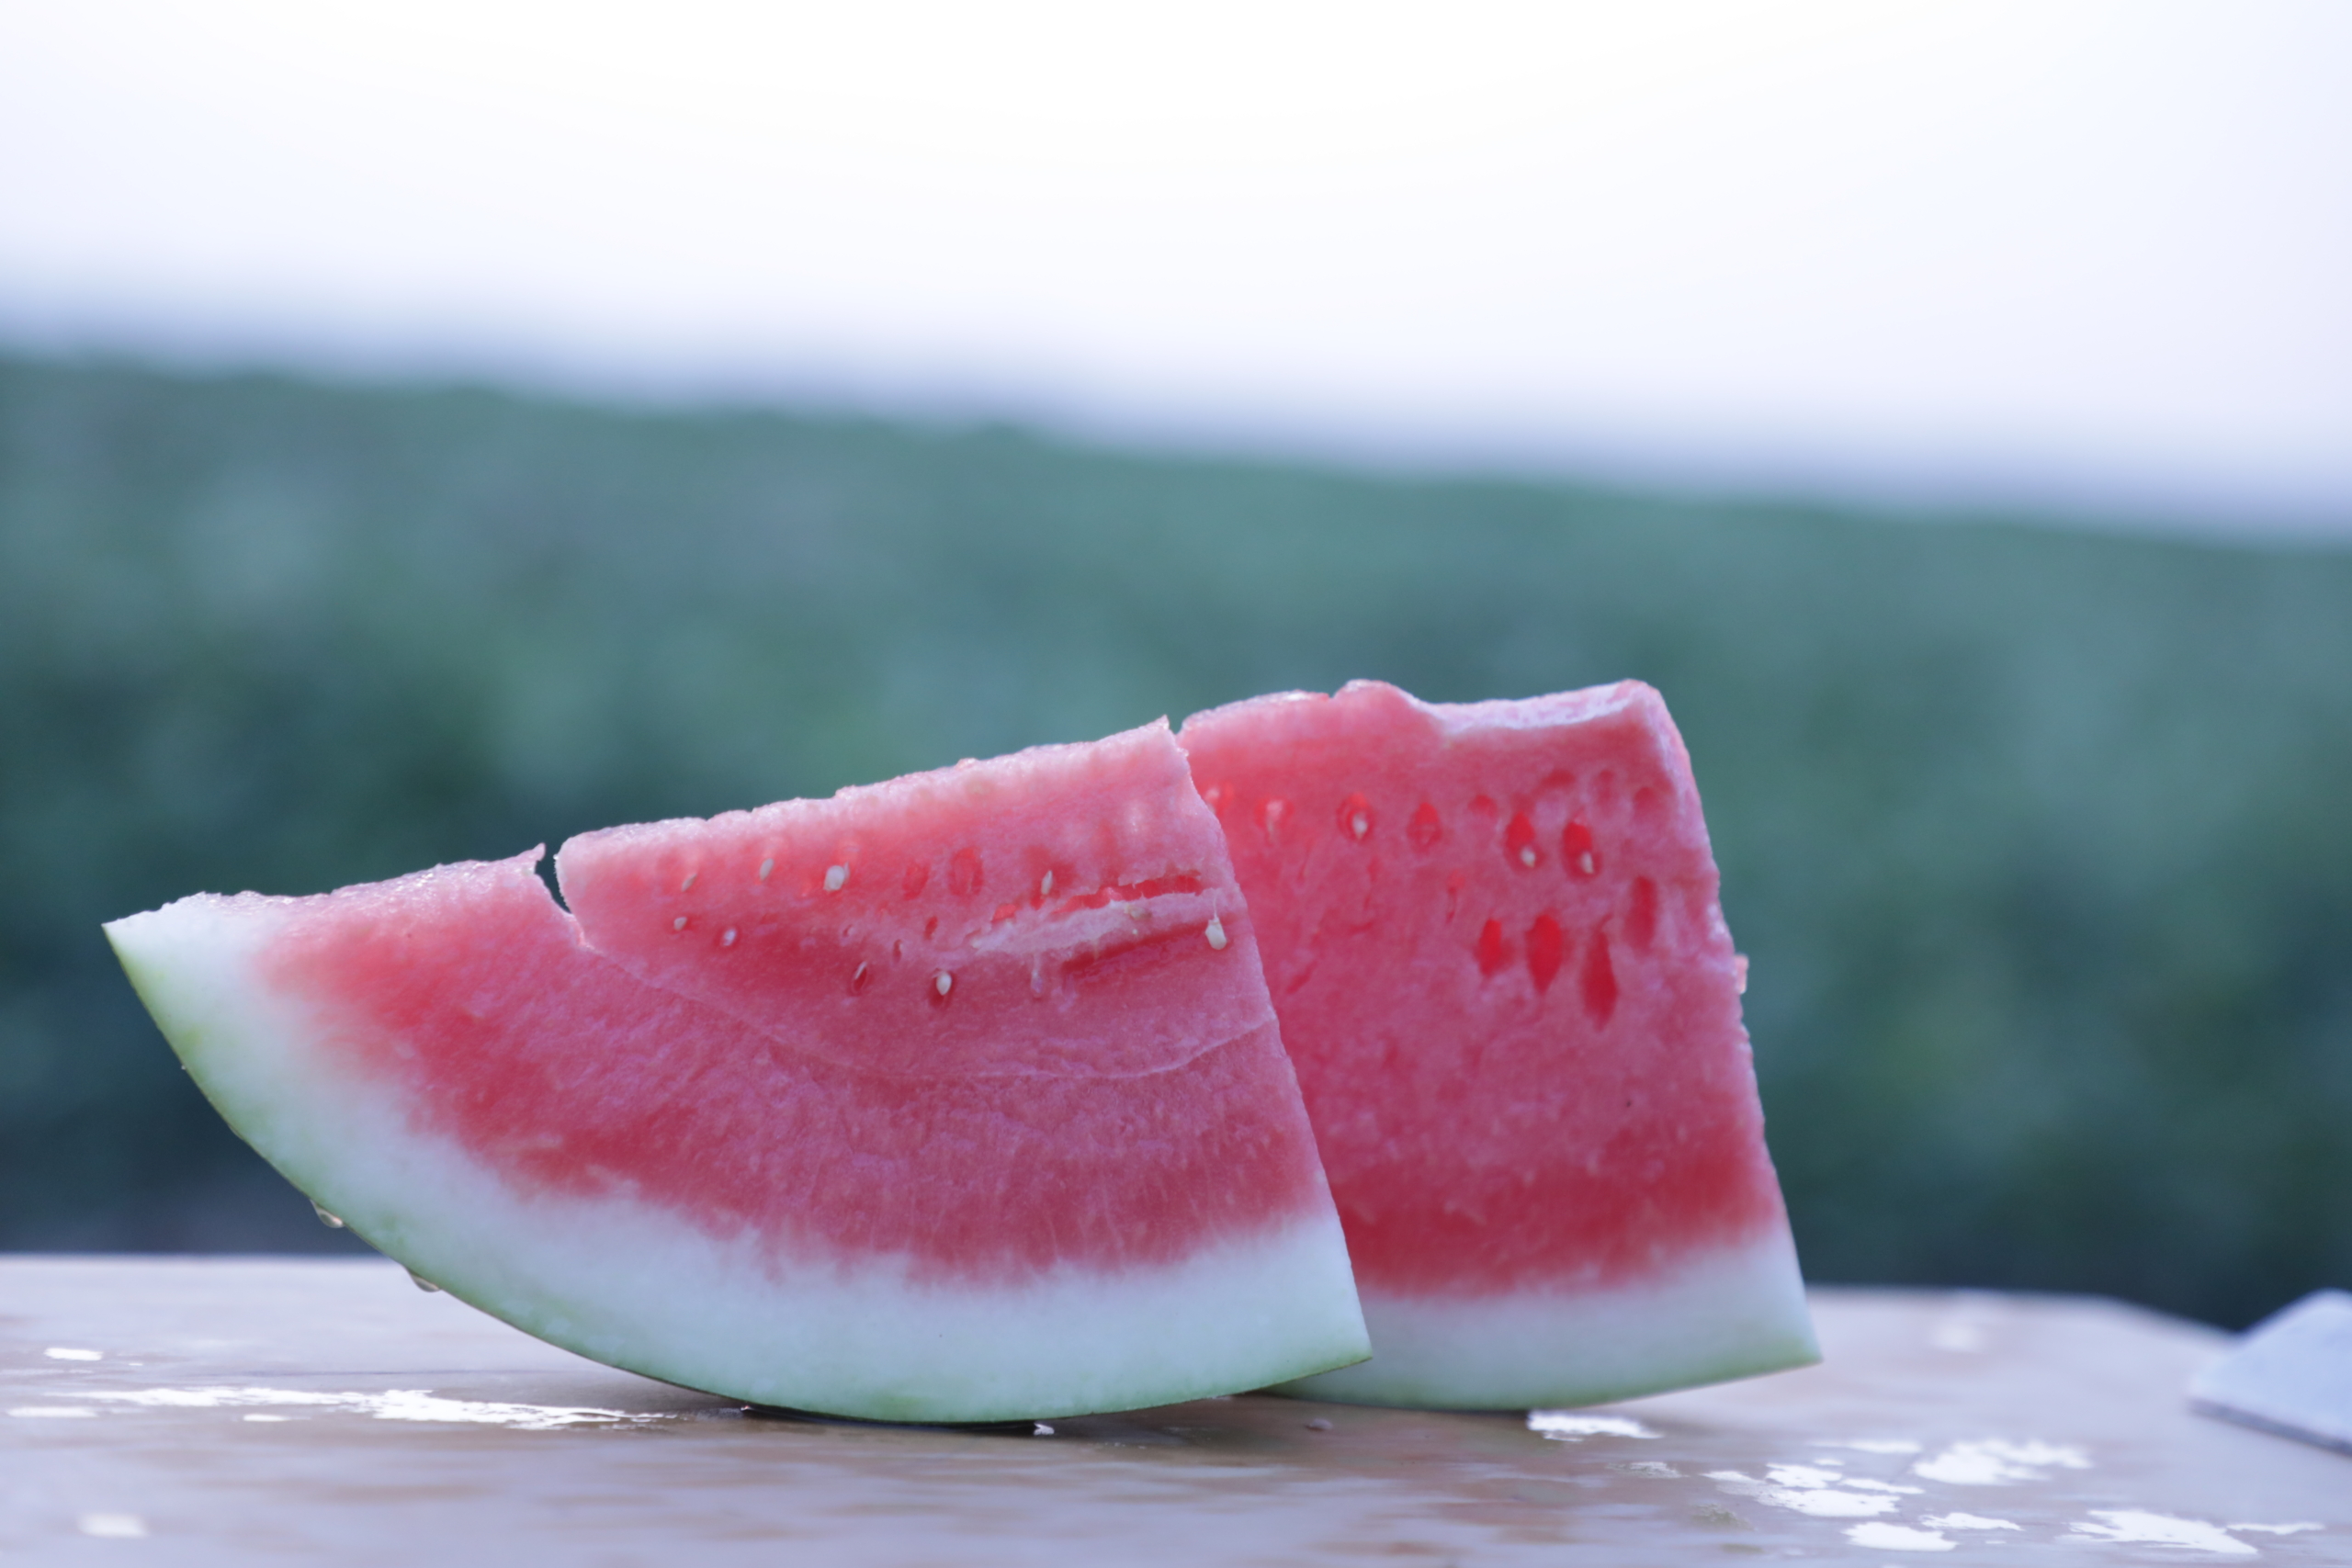 Texas watermelon growers report good yields, high quality Texas watermelon growers are reporting good yields and high-quality melons this season.